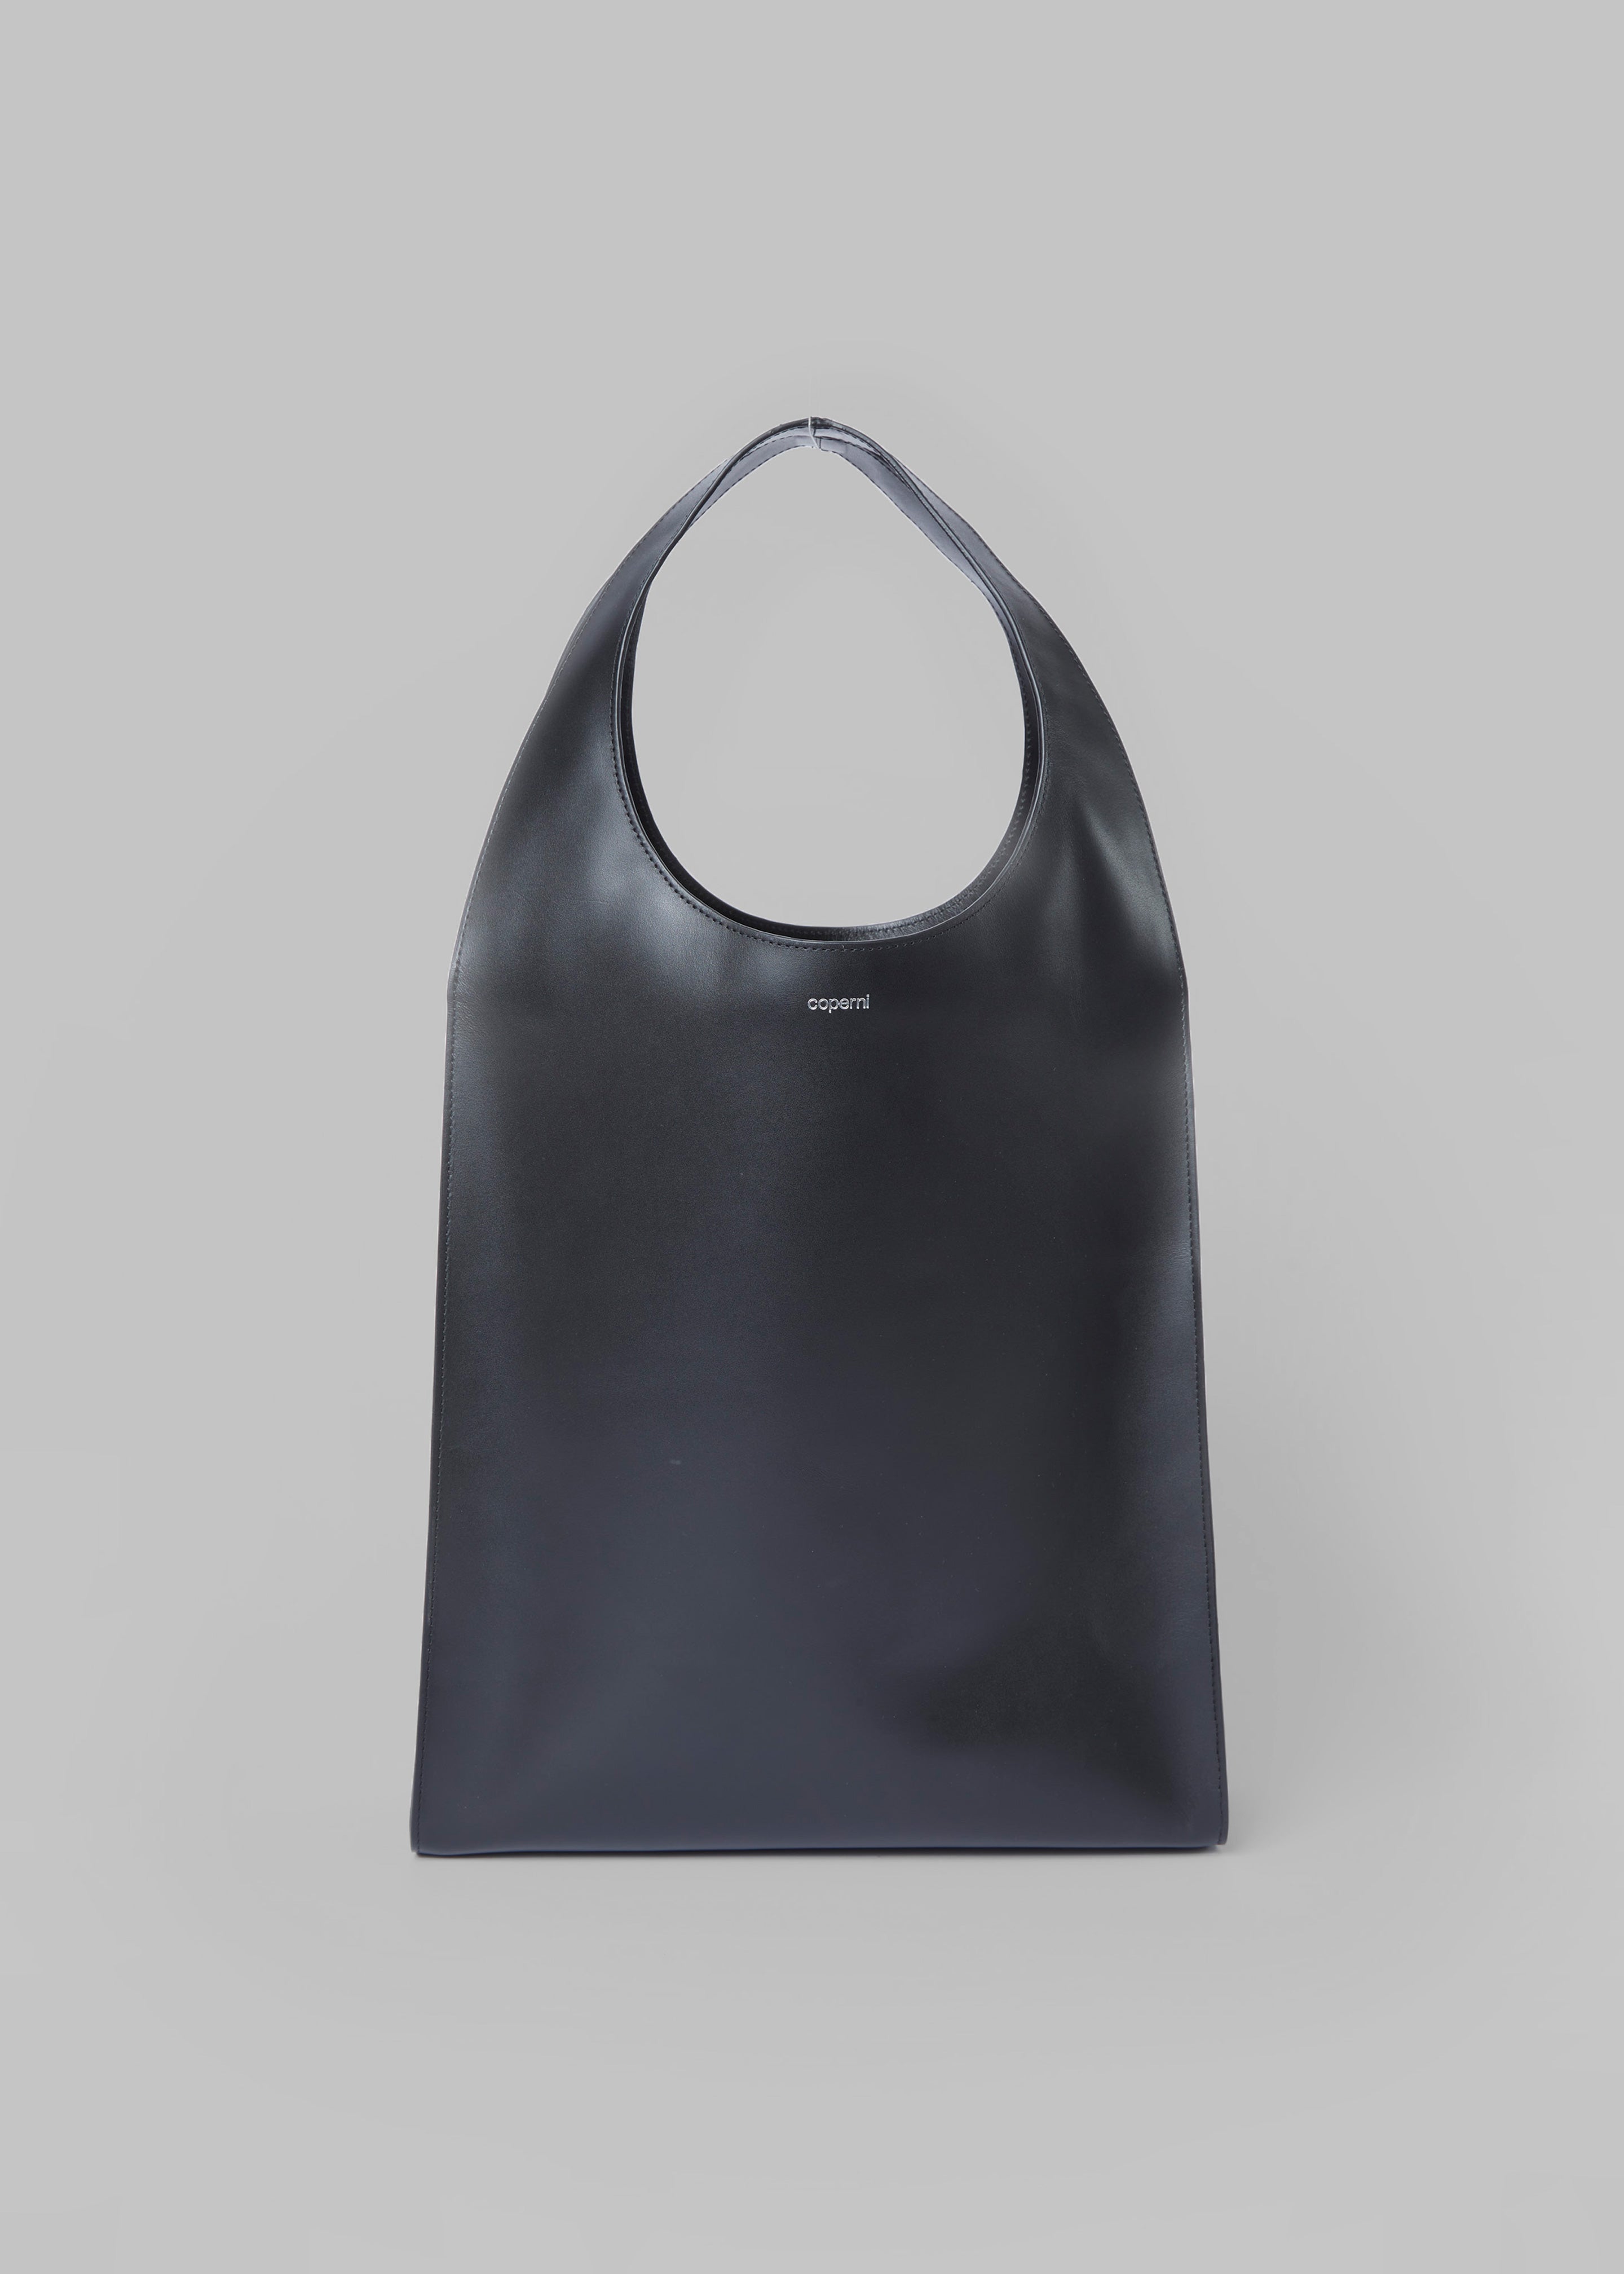 Coperni Swipe Tote Bag - Black – The Frankie Shop